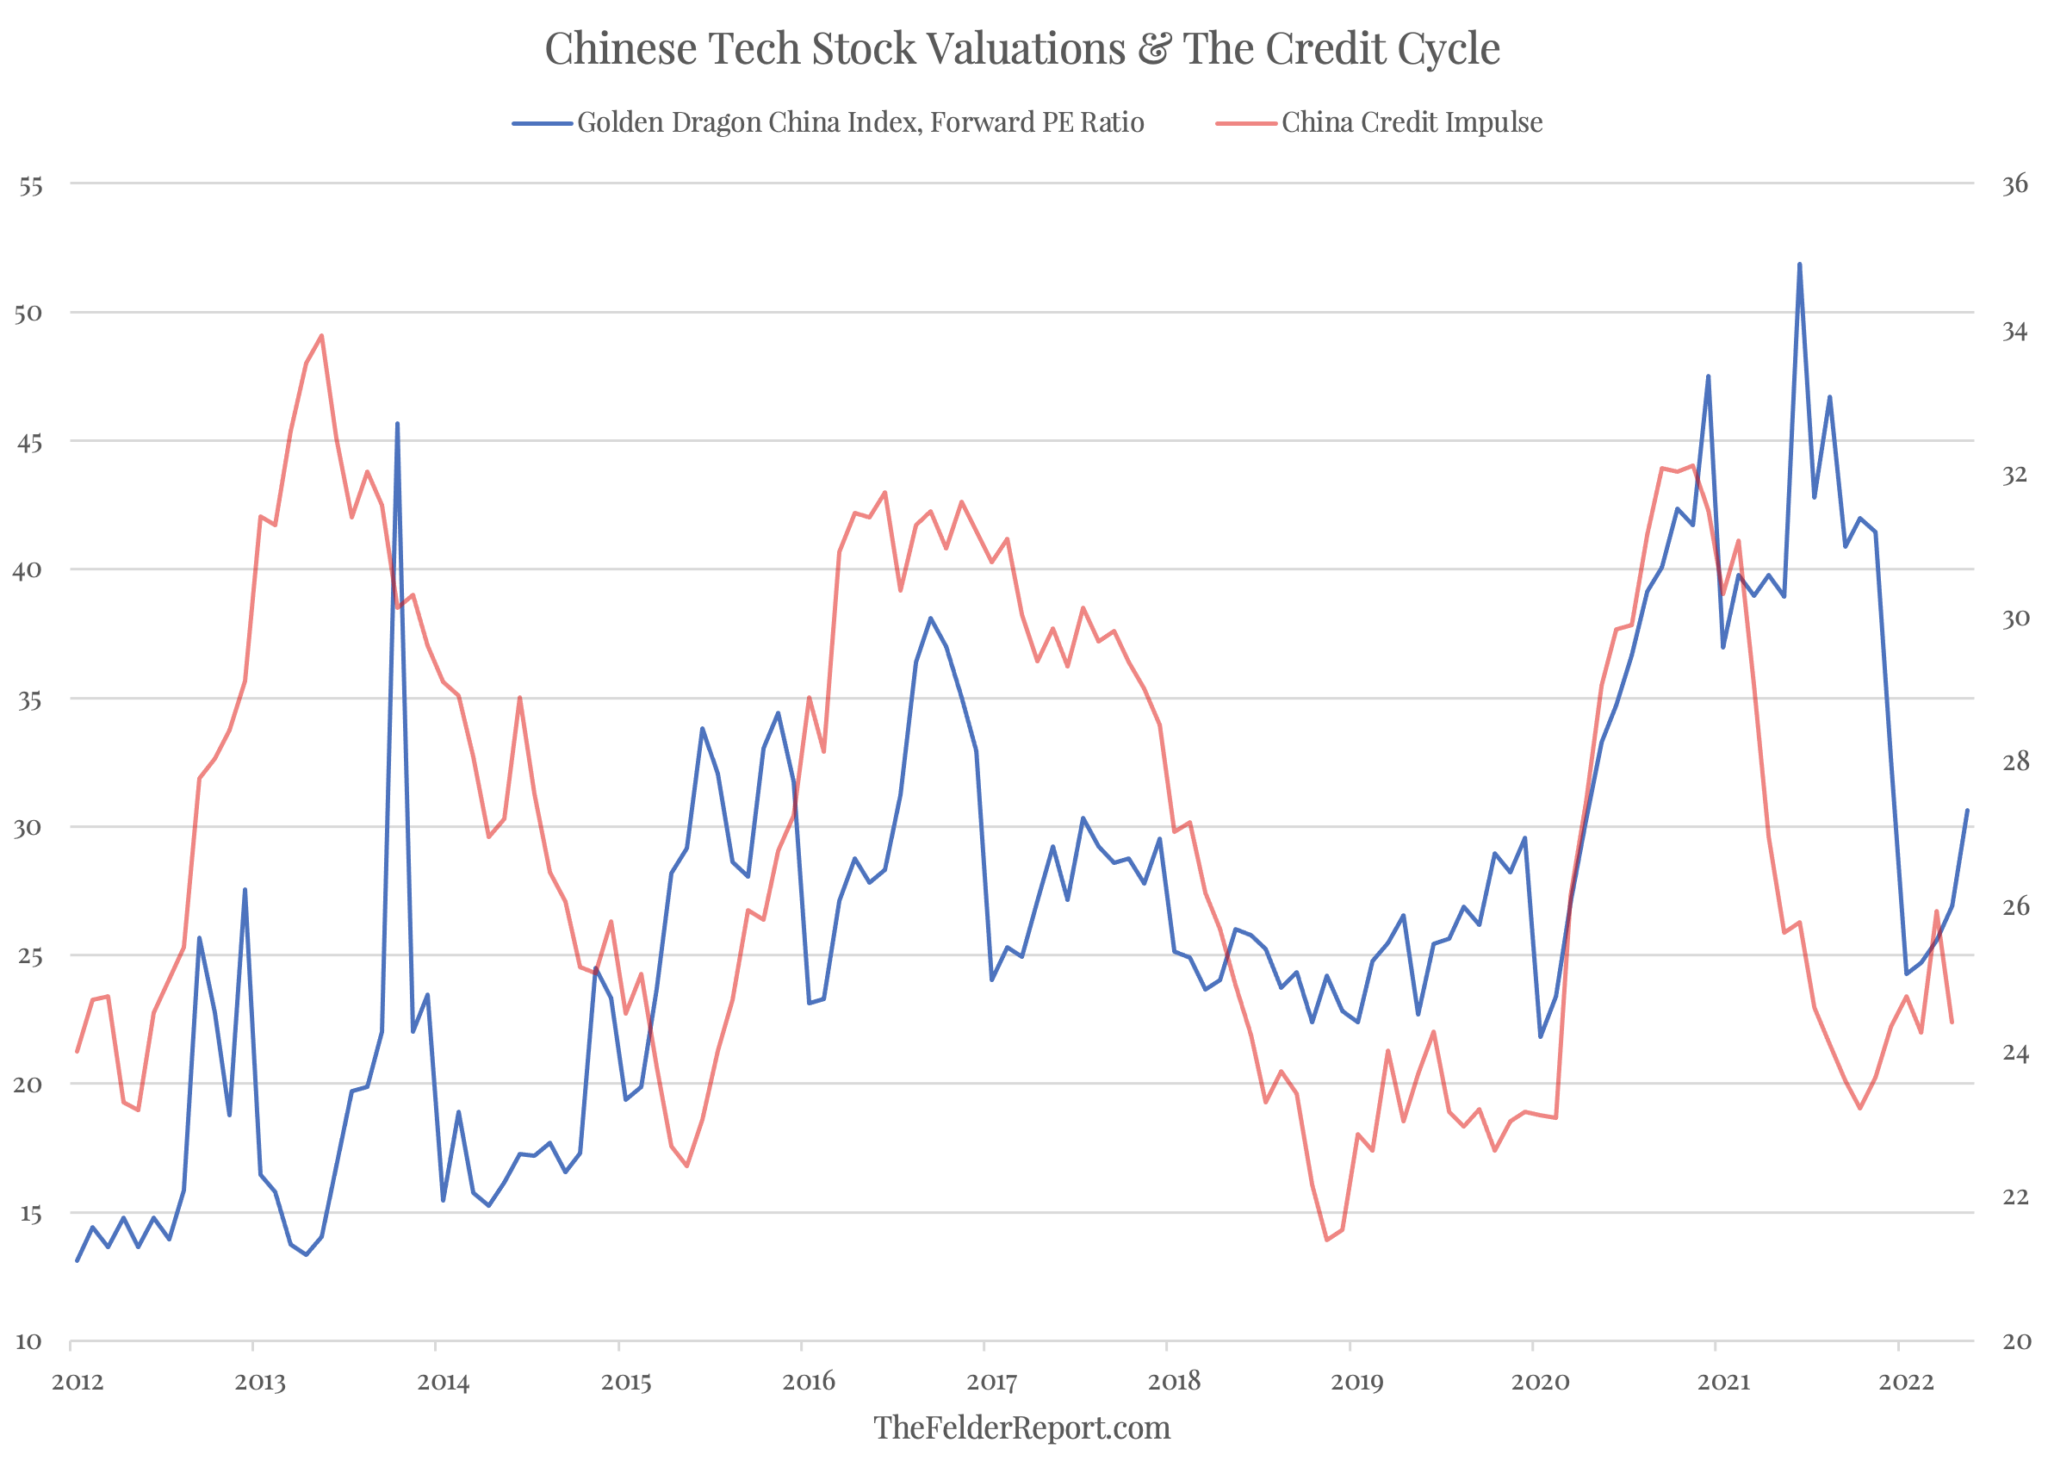 Golden Dragon China Index, China Credit Impulse